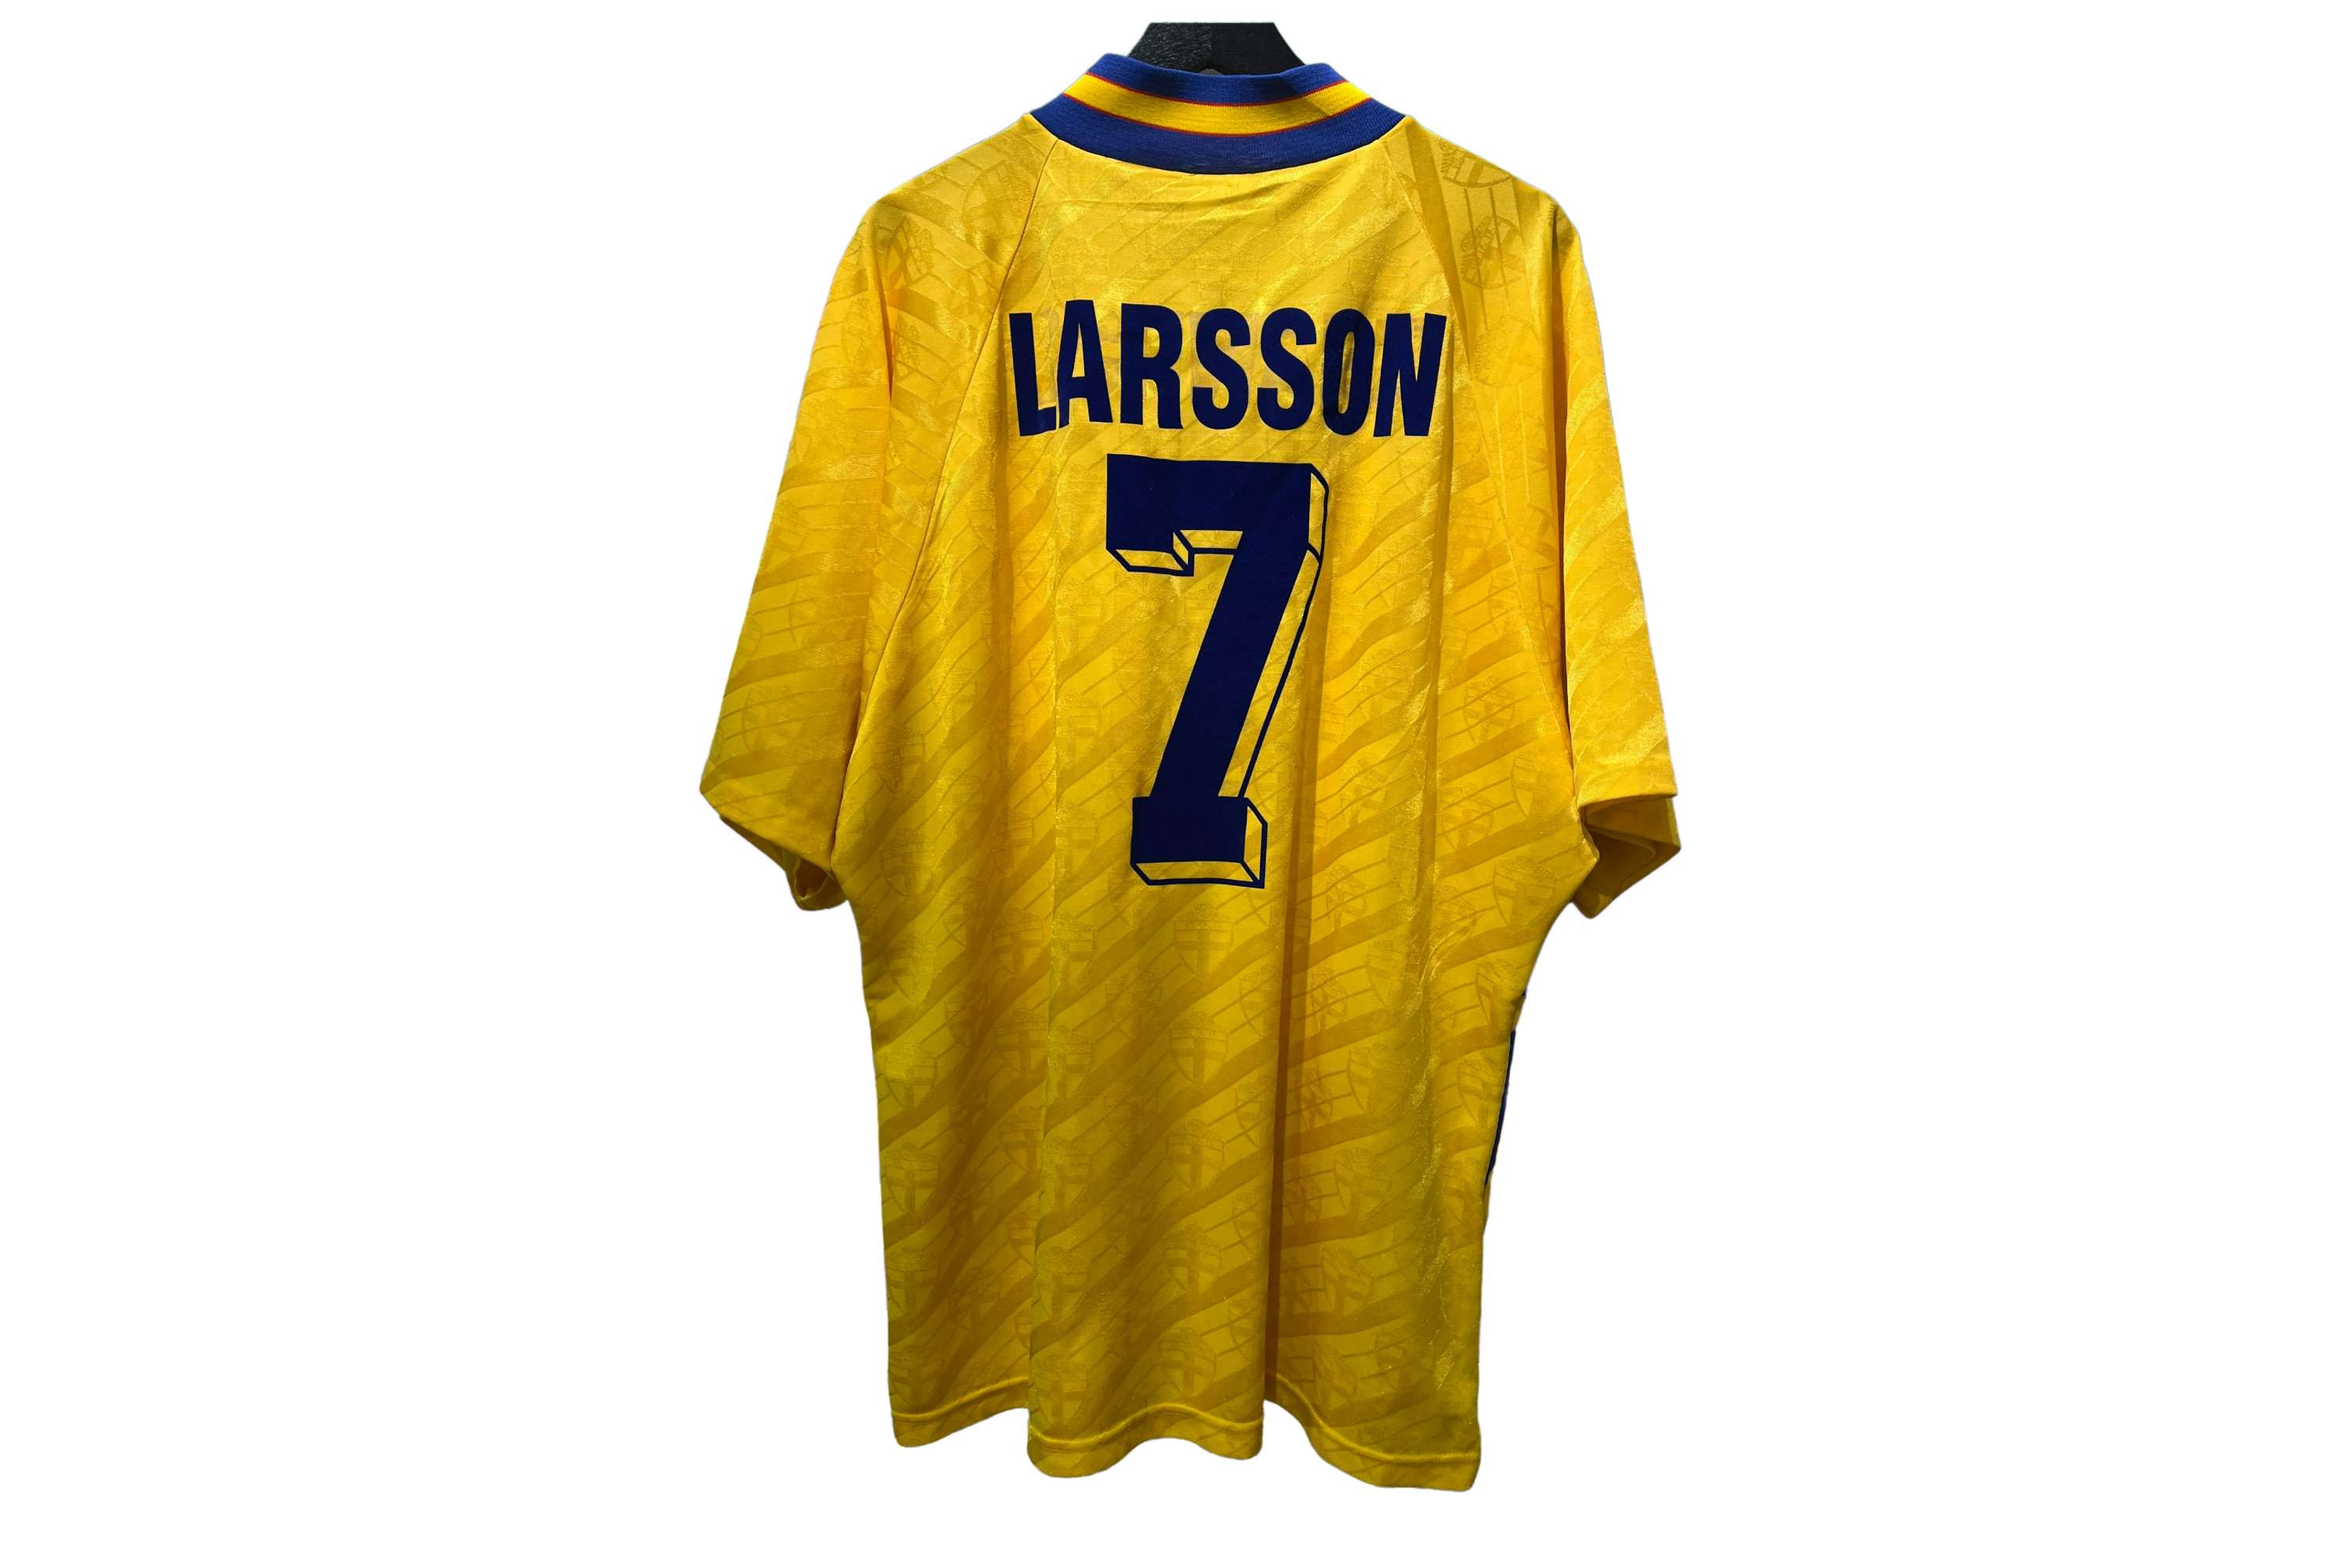 Adidas - Sweden 1994 Home Football Shirt 'LARSSON'